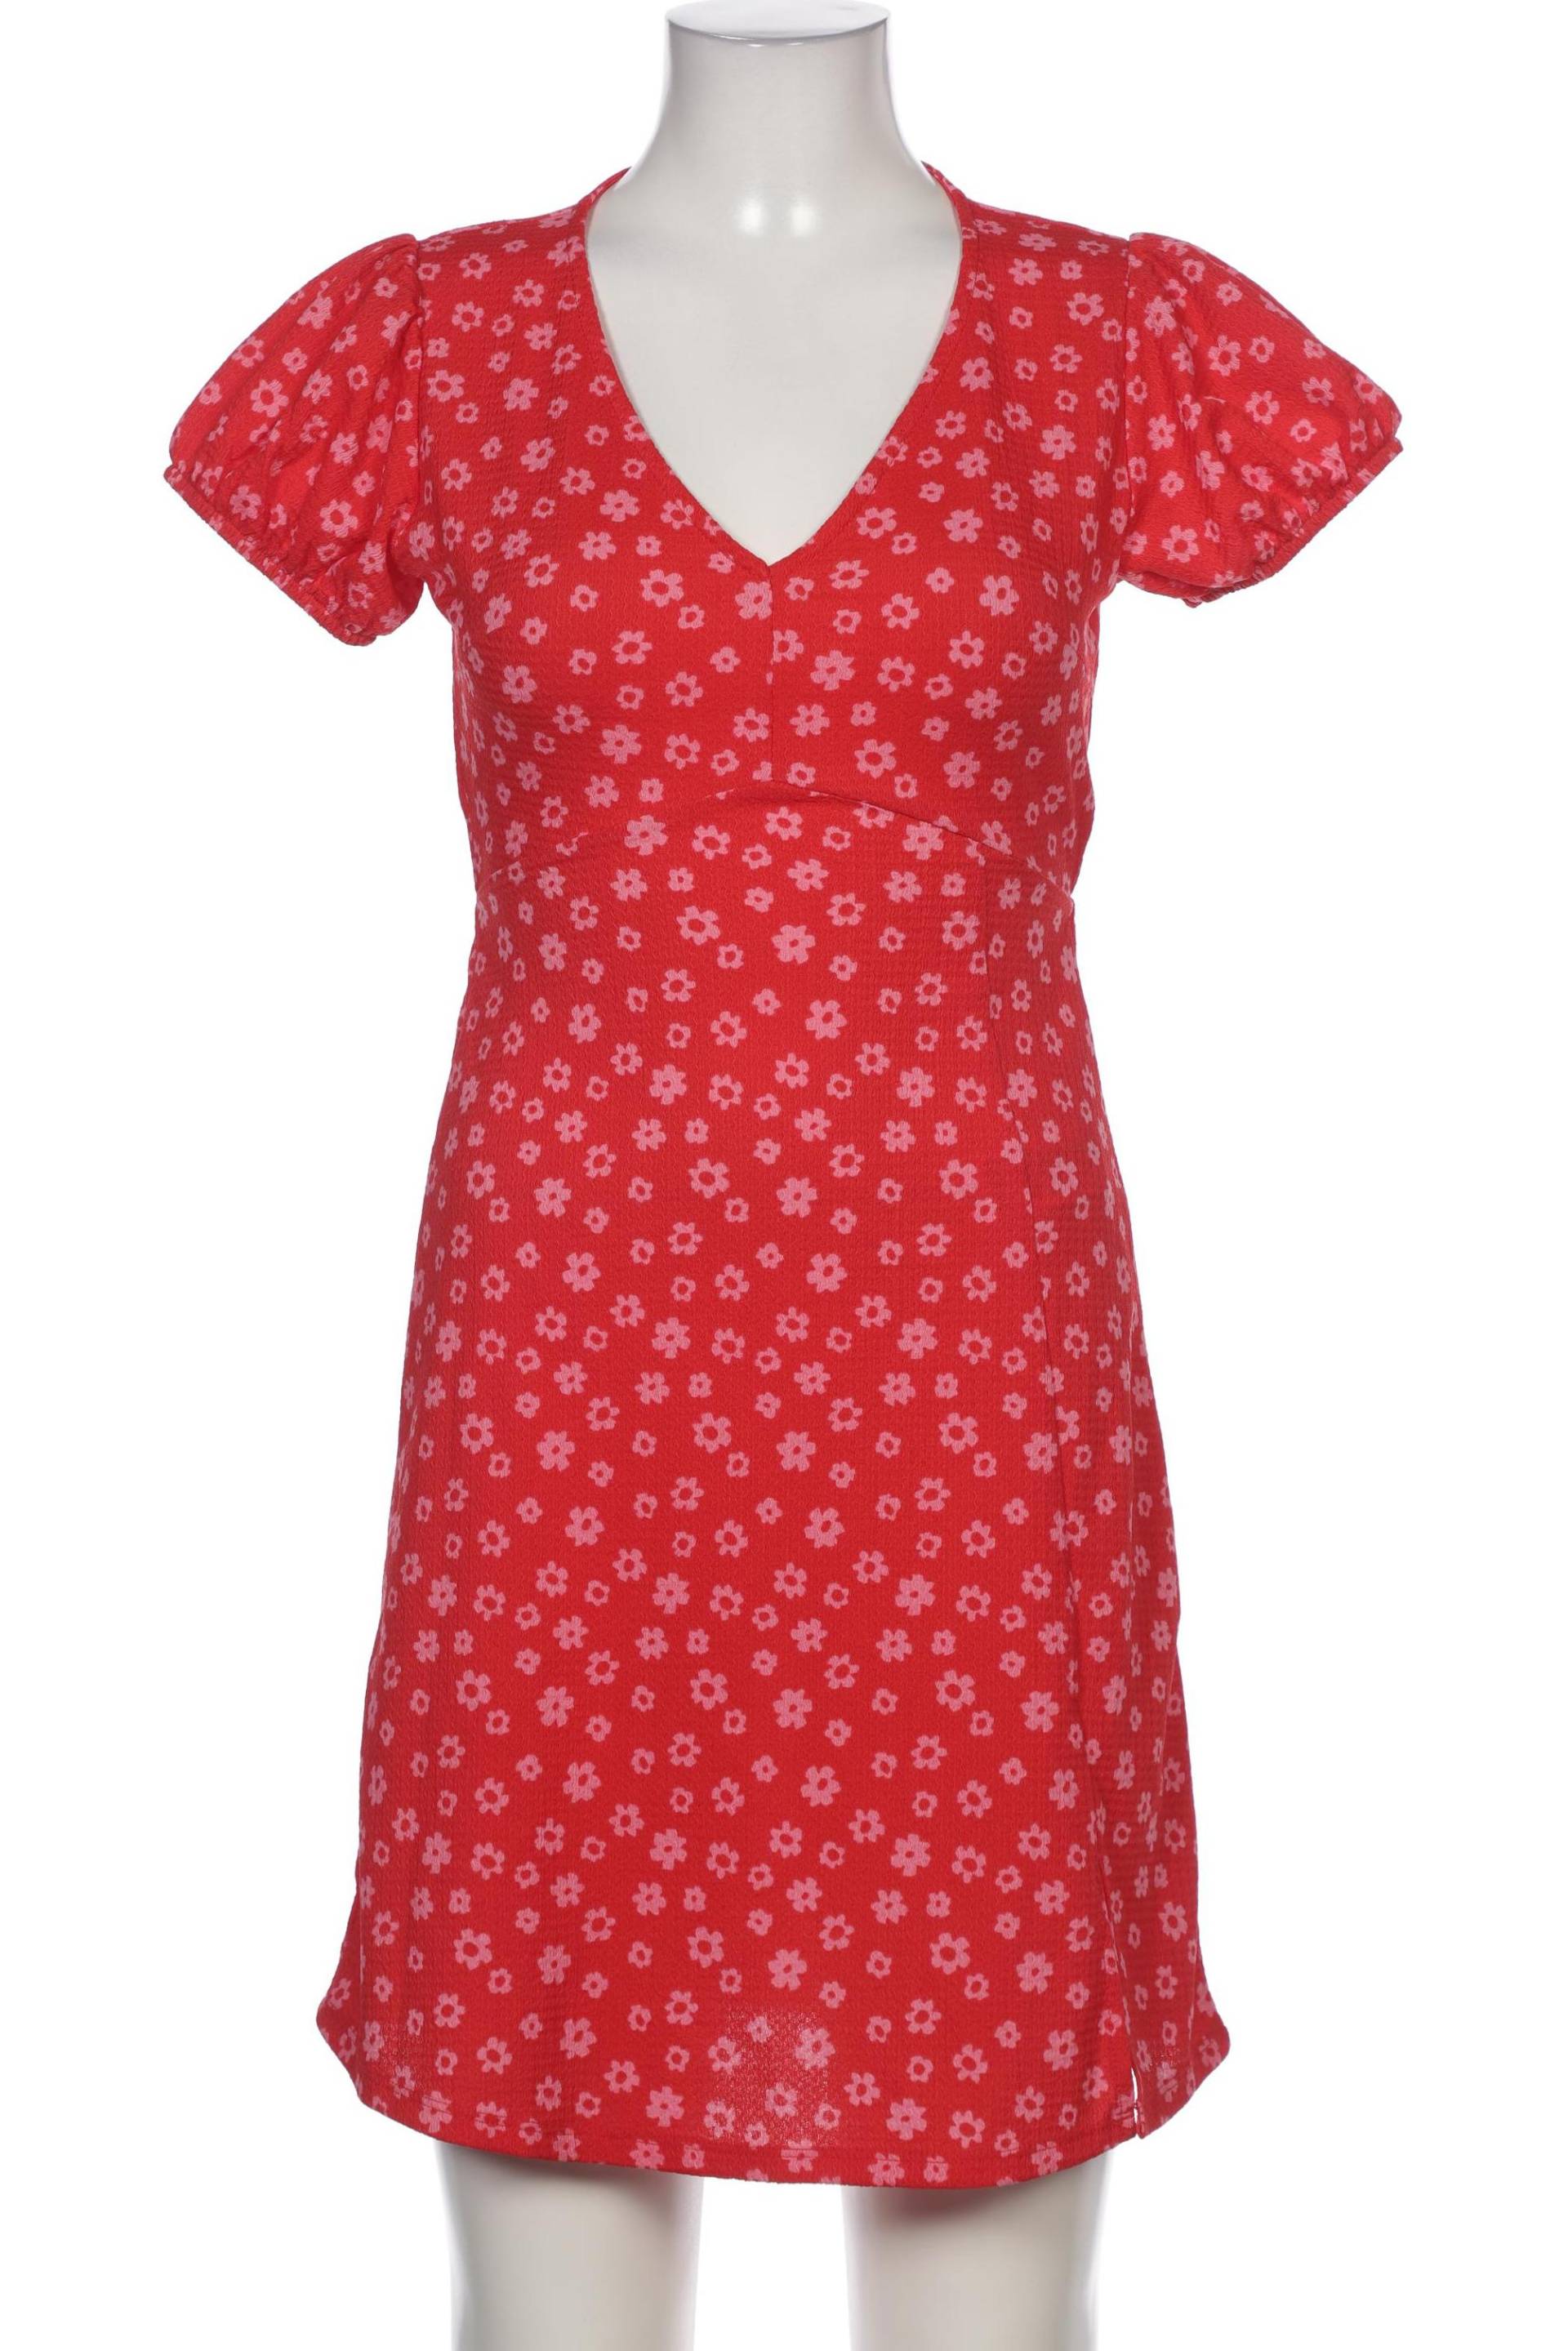 Kiabi Damen Kleid, rot, Gr. 36 von Kiabi